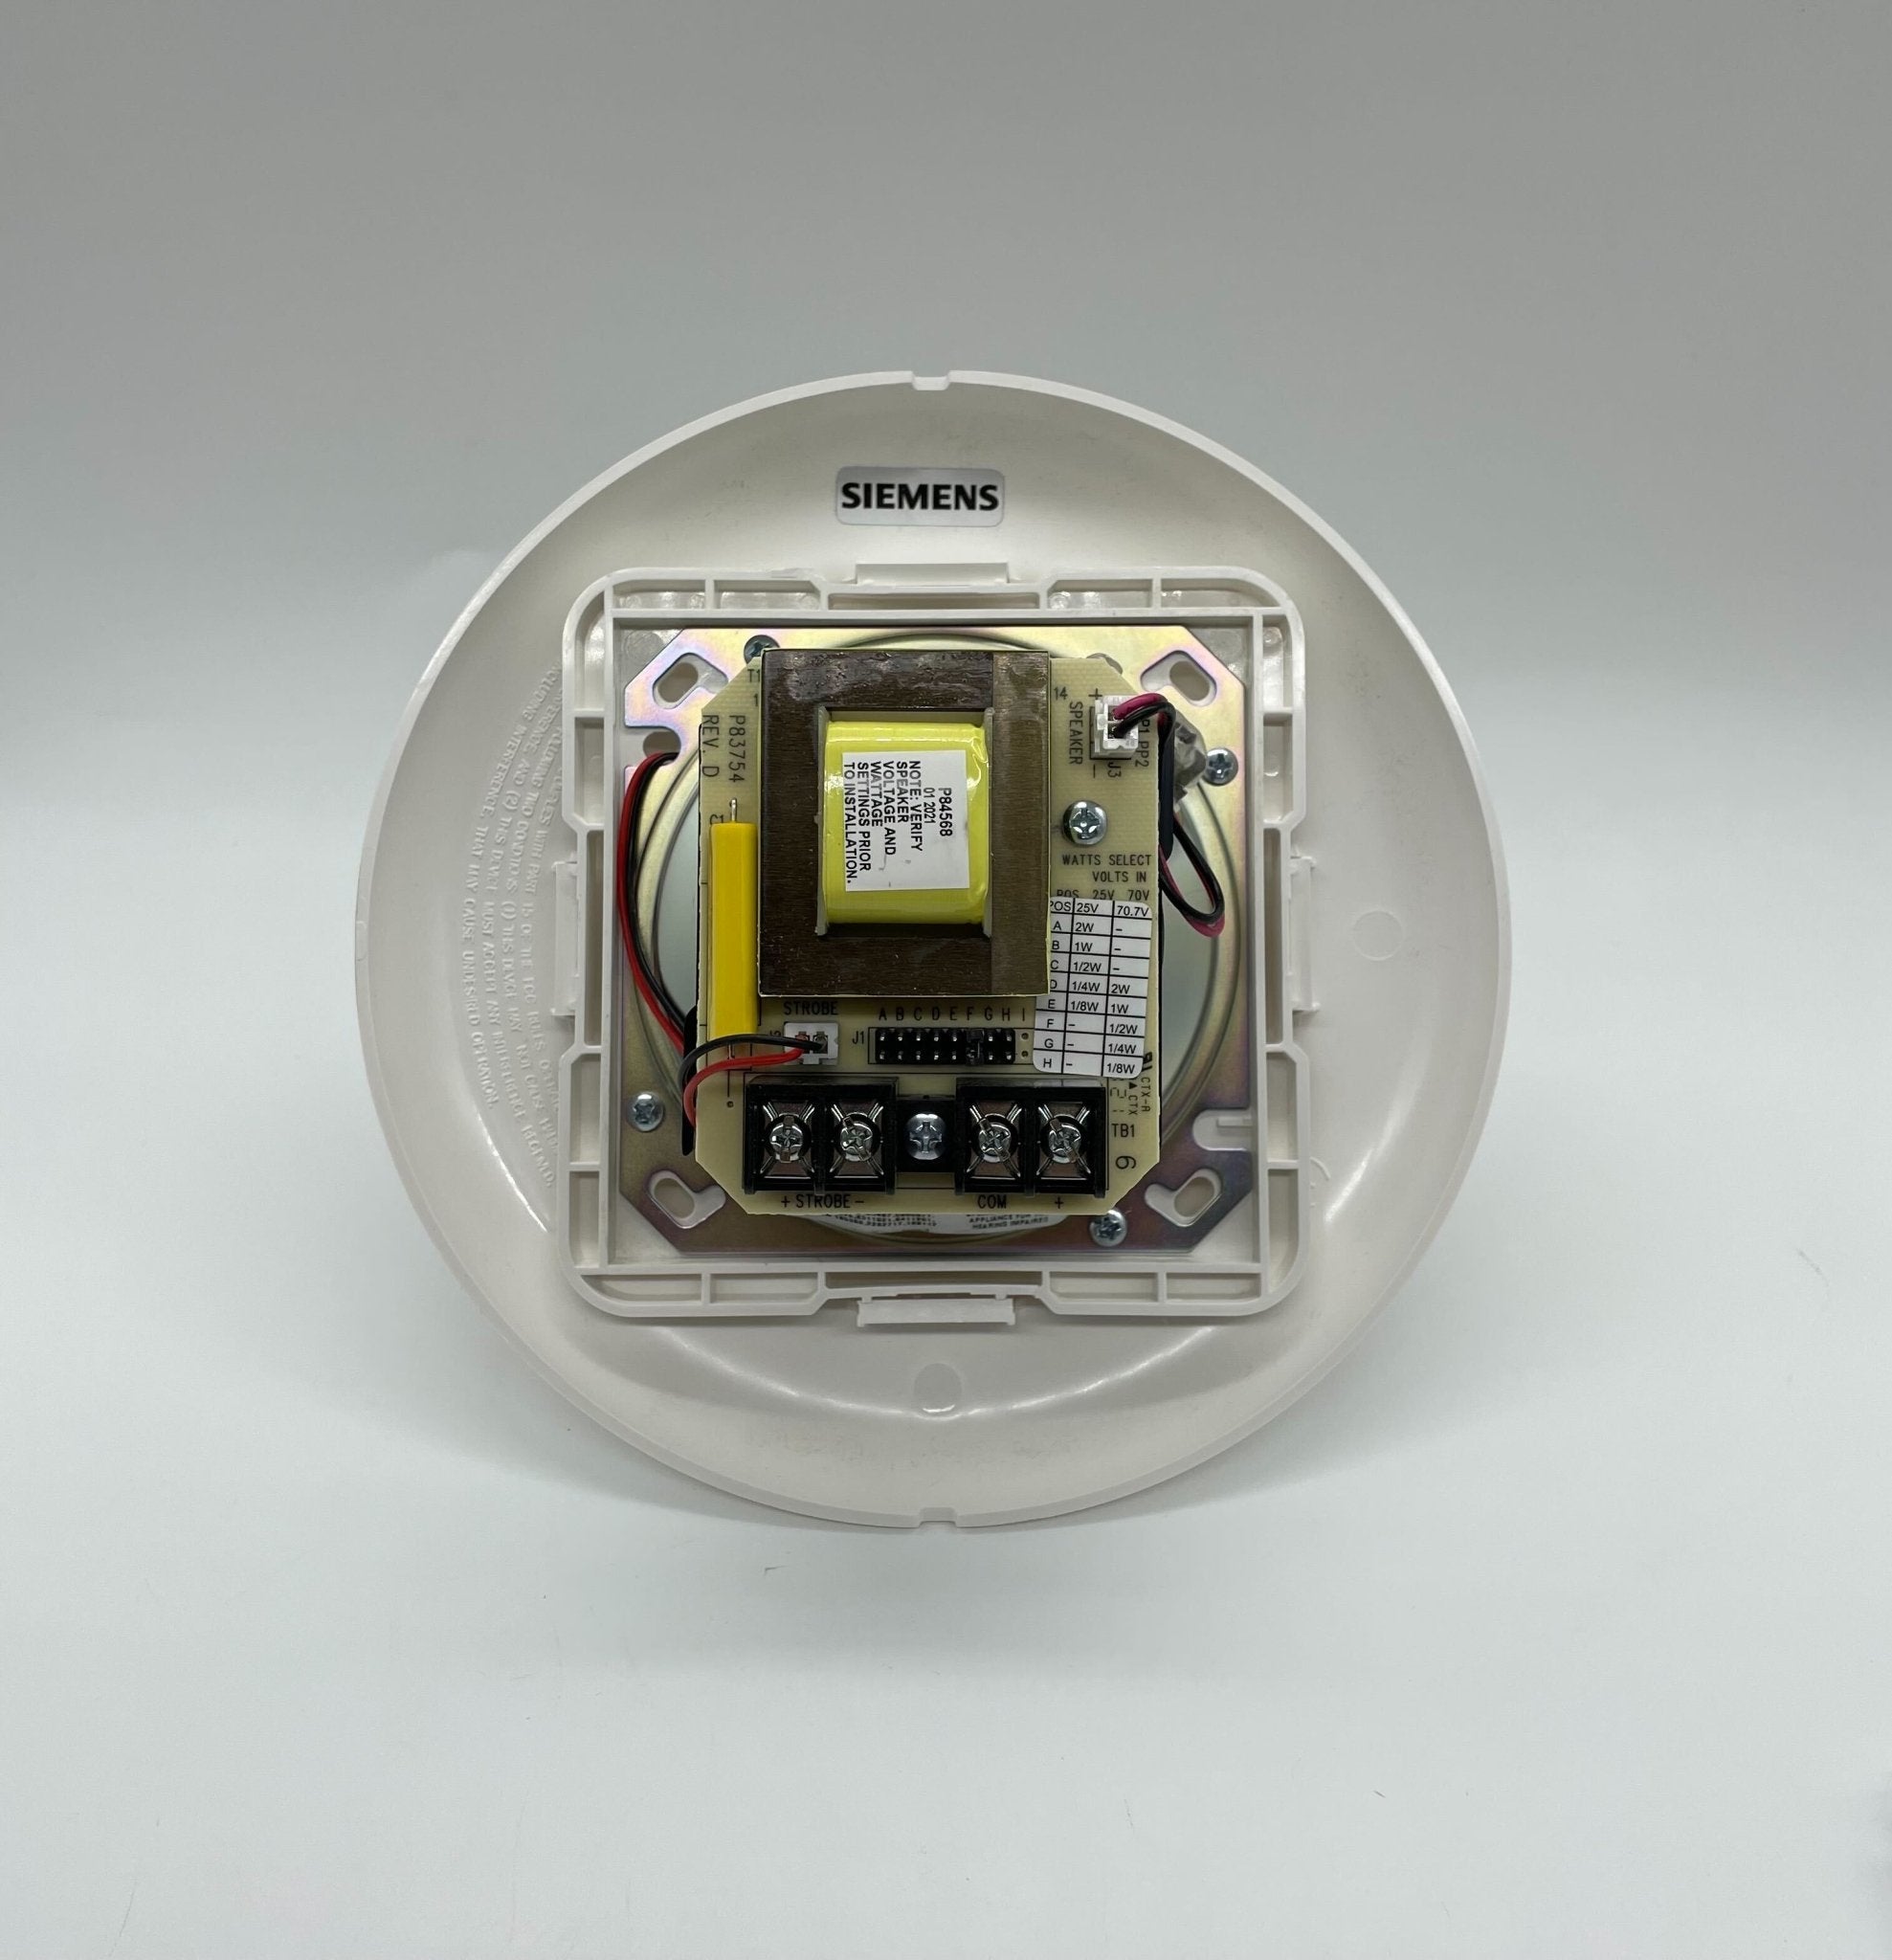 Siemens SE-HMC-CW - The Fire Alarm Supplier